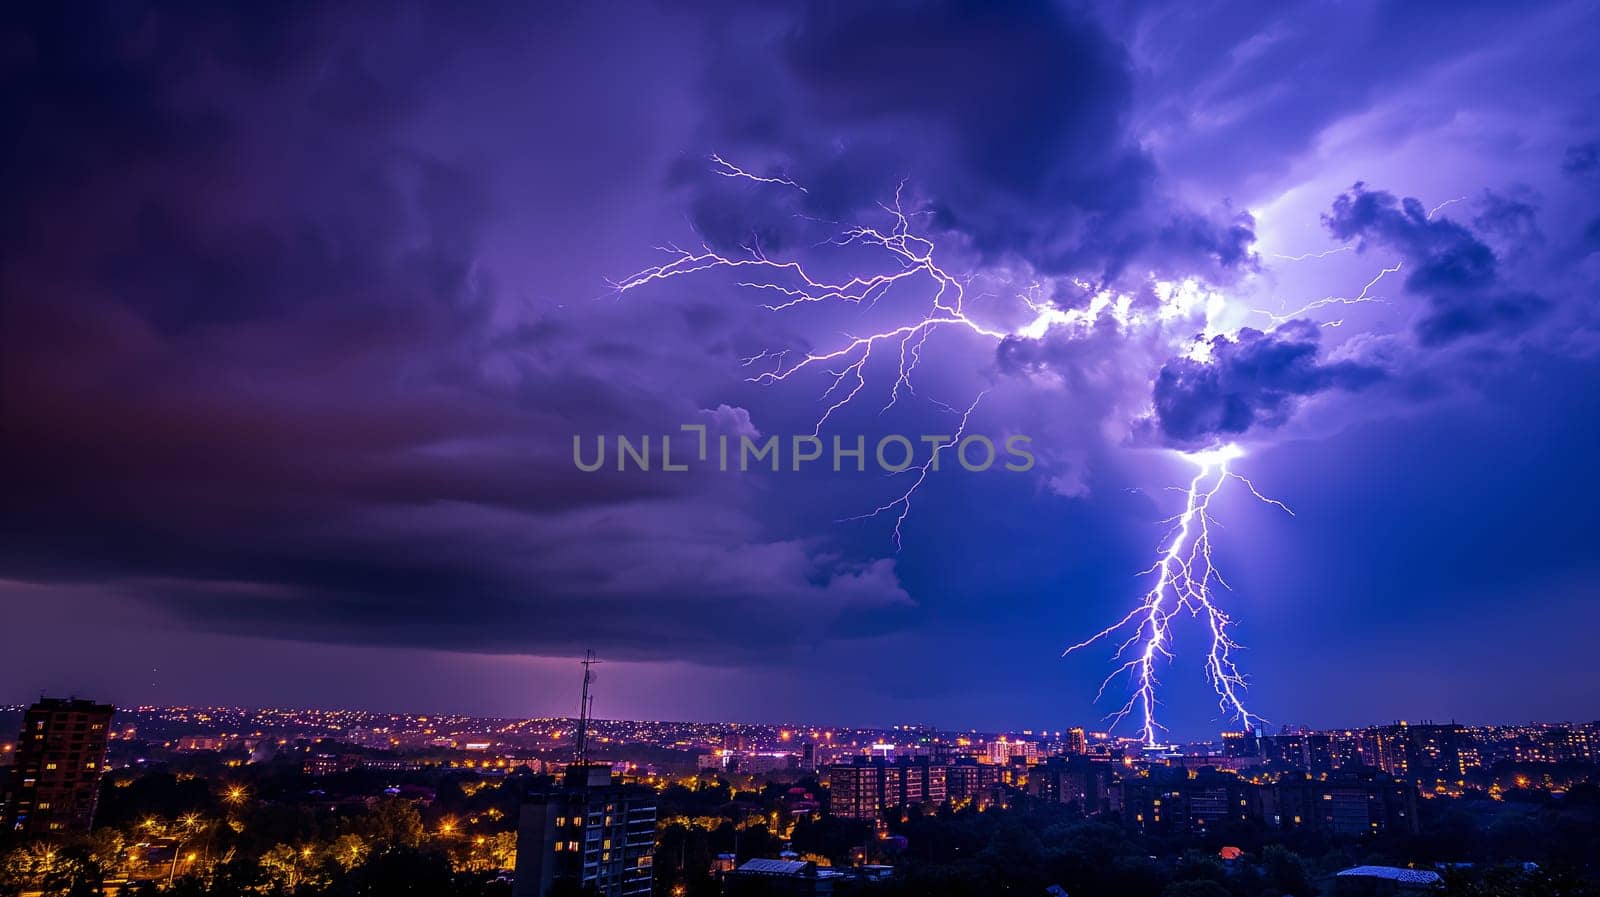 Lightning Bolt Striking Over City at Night by chrisroll